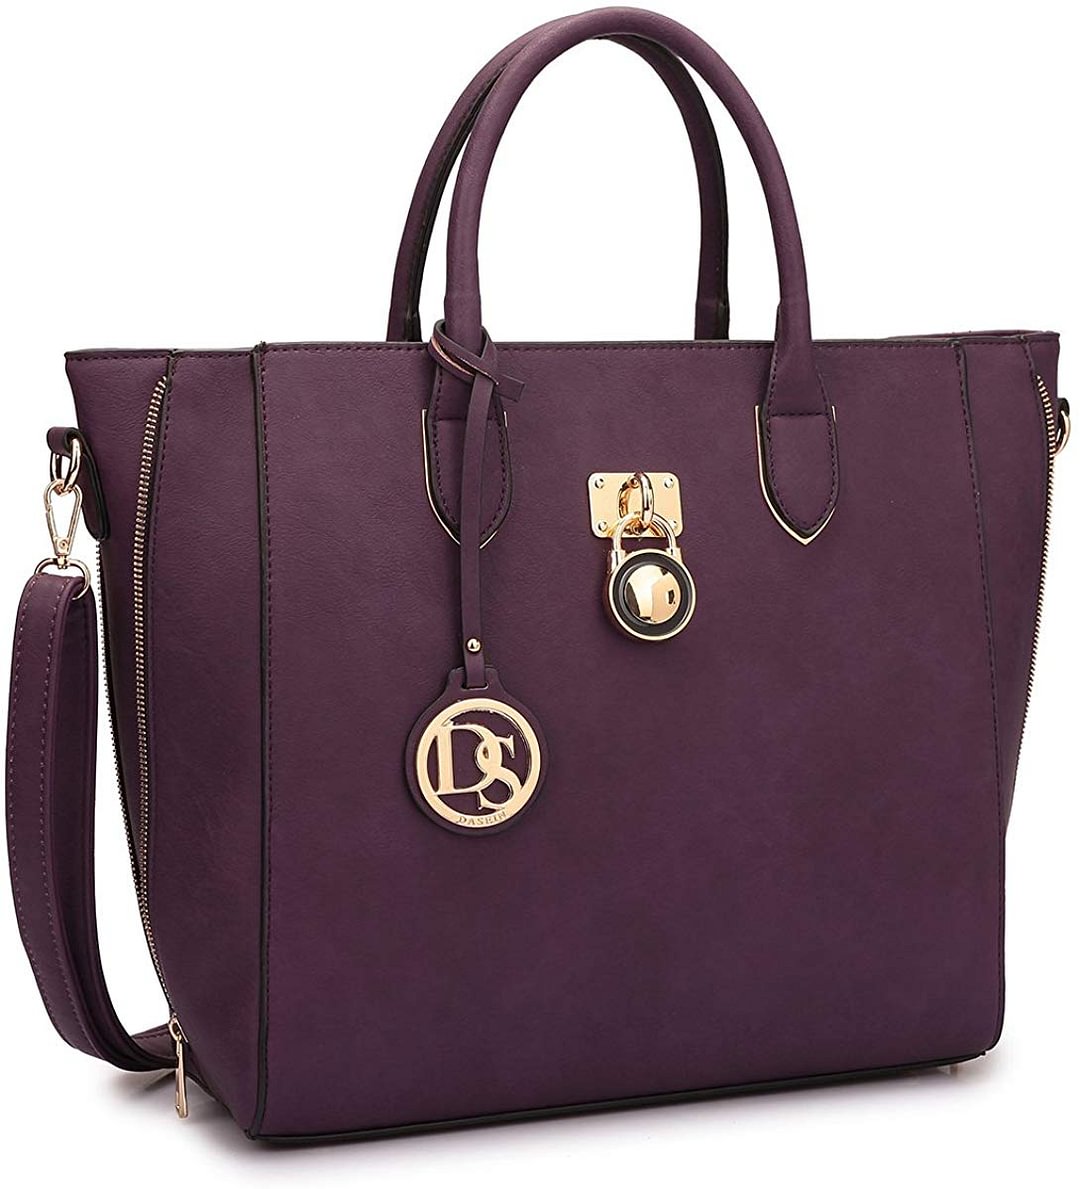 Women's Handbags Purses Large Tote Shoulder Bag Top Handle Satchel Bag